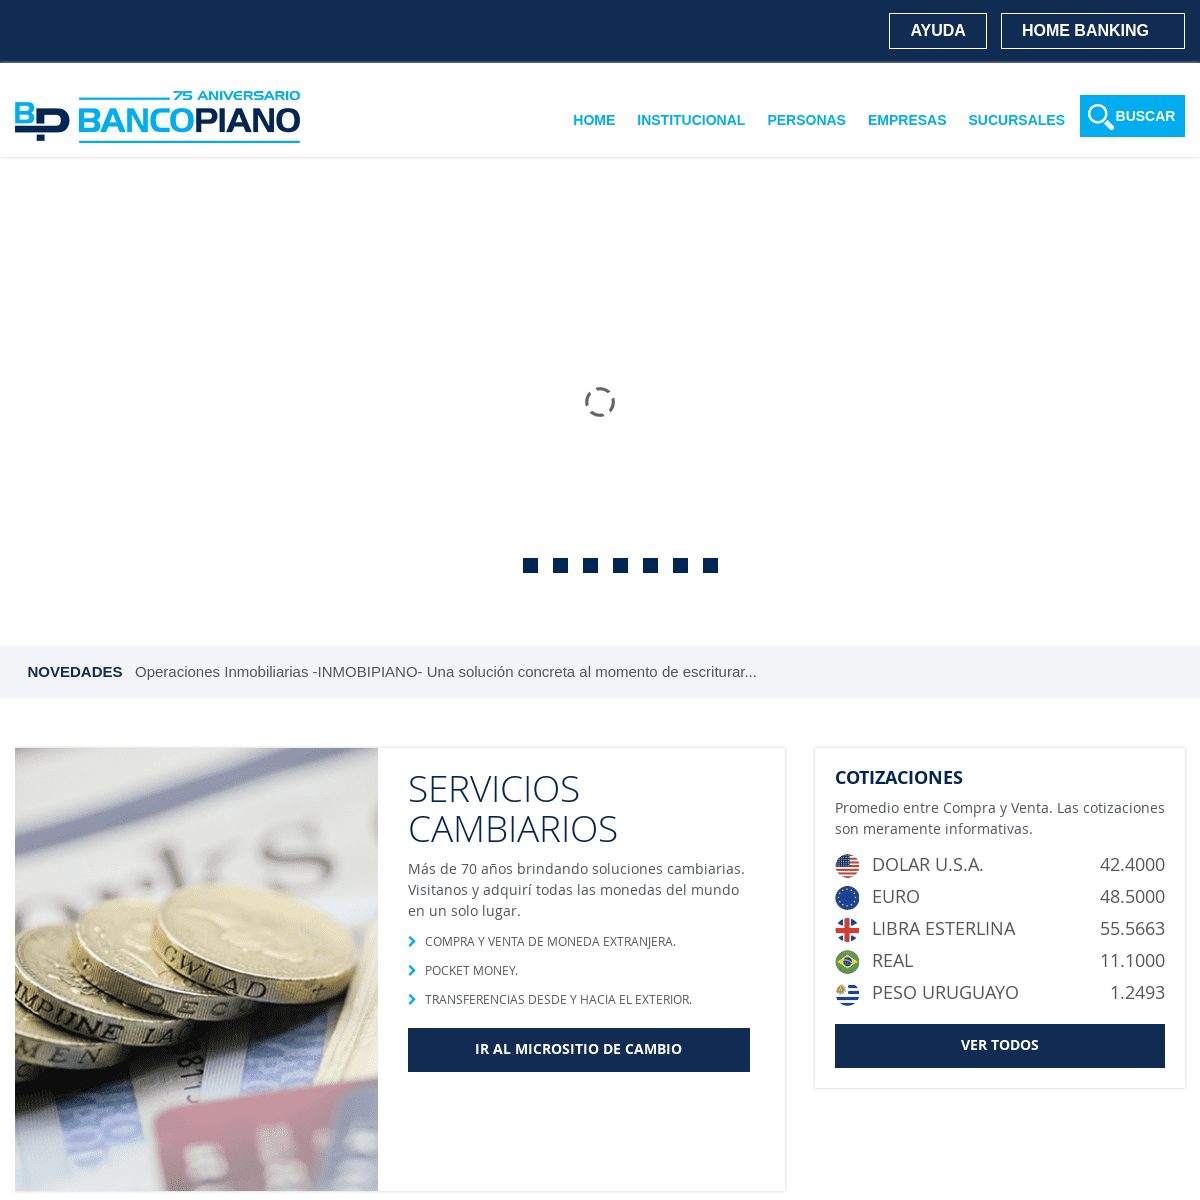 A complete backup of bancopiano.com.ar